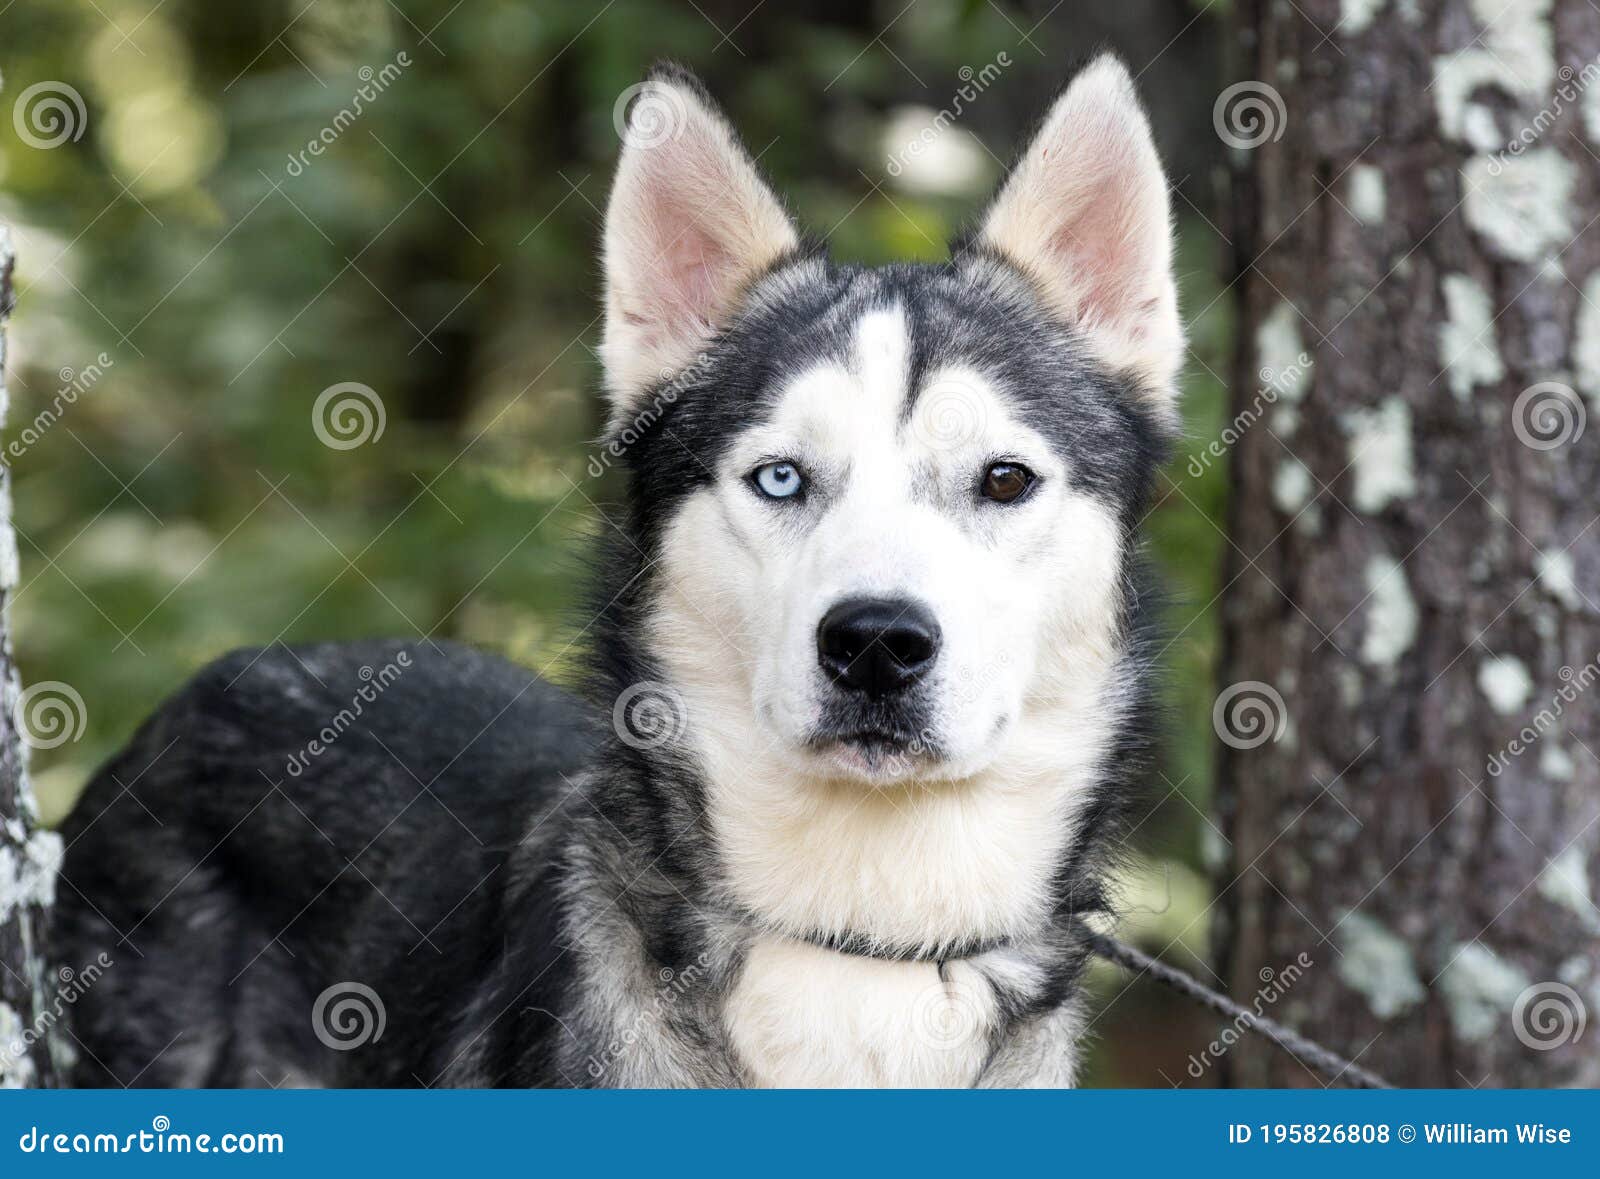 siberian husky puppies for adoption